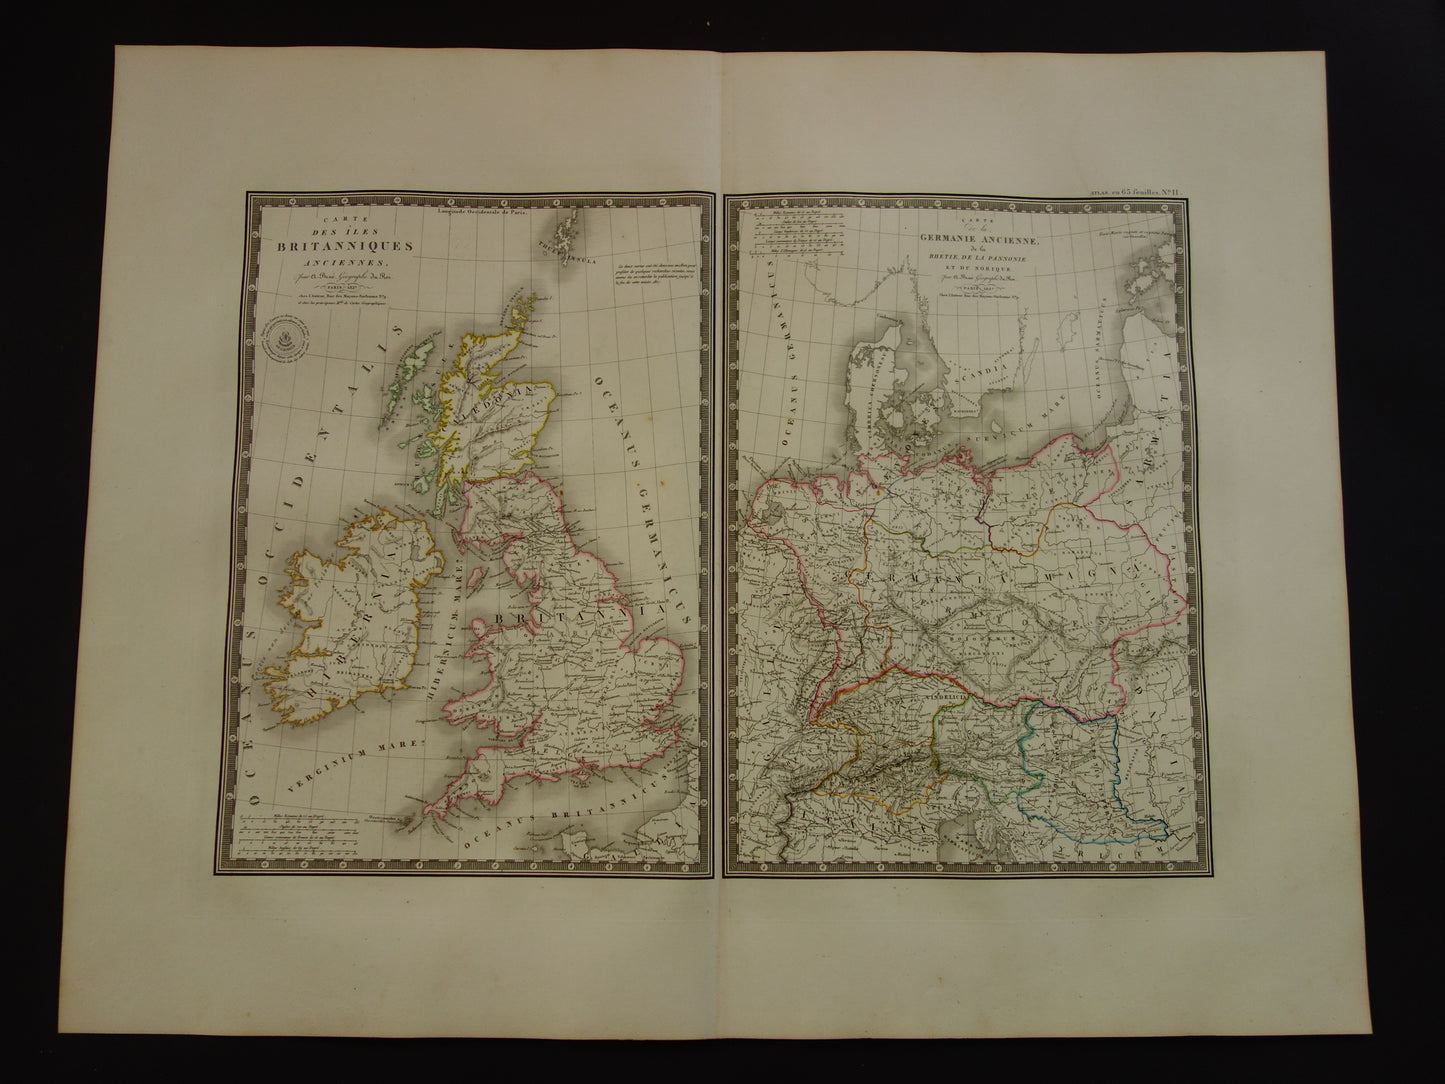 Groot-Brittanië en Duitsland in de Romeinse tijd antieke landkaart centraal Europa Germania Britannia Hibernia